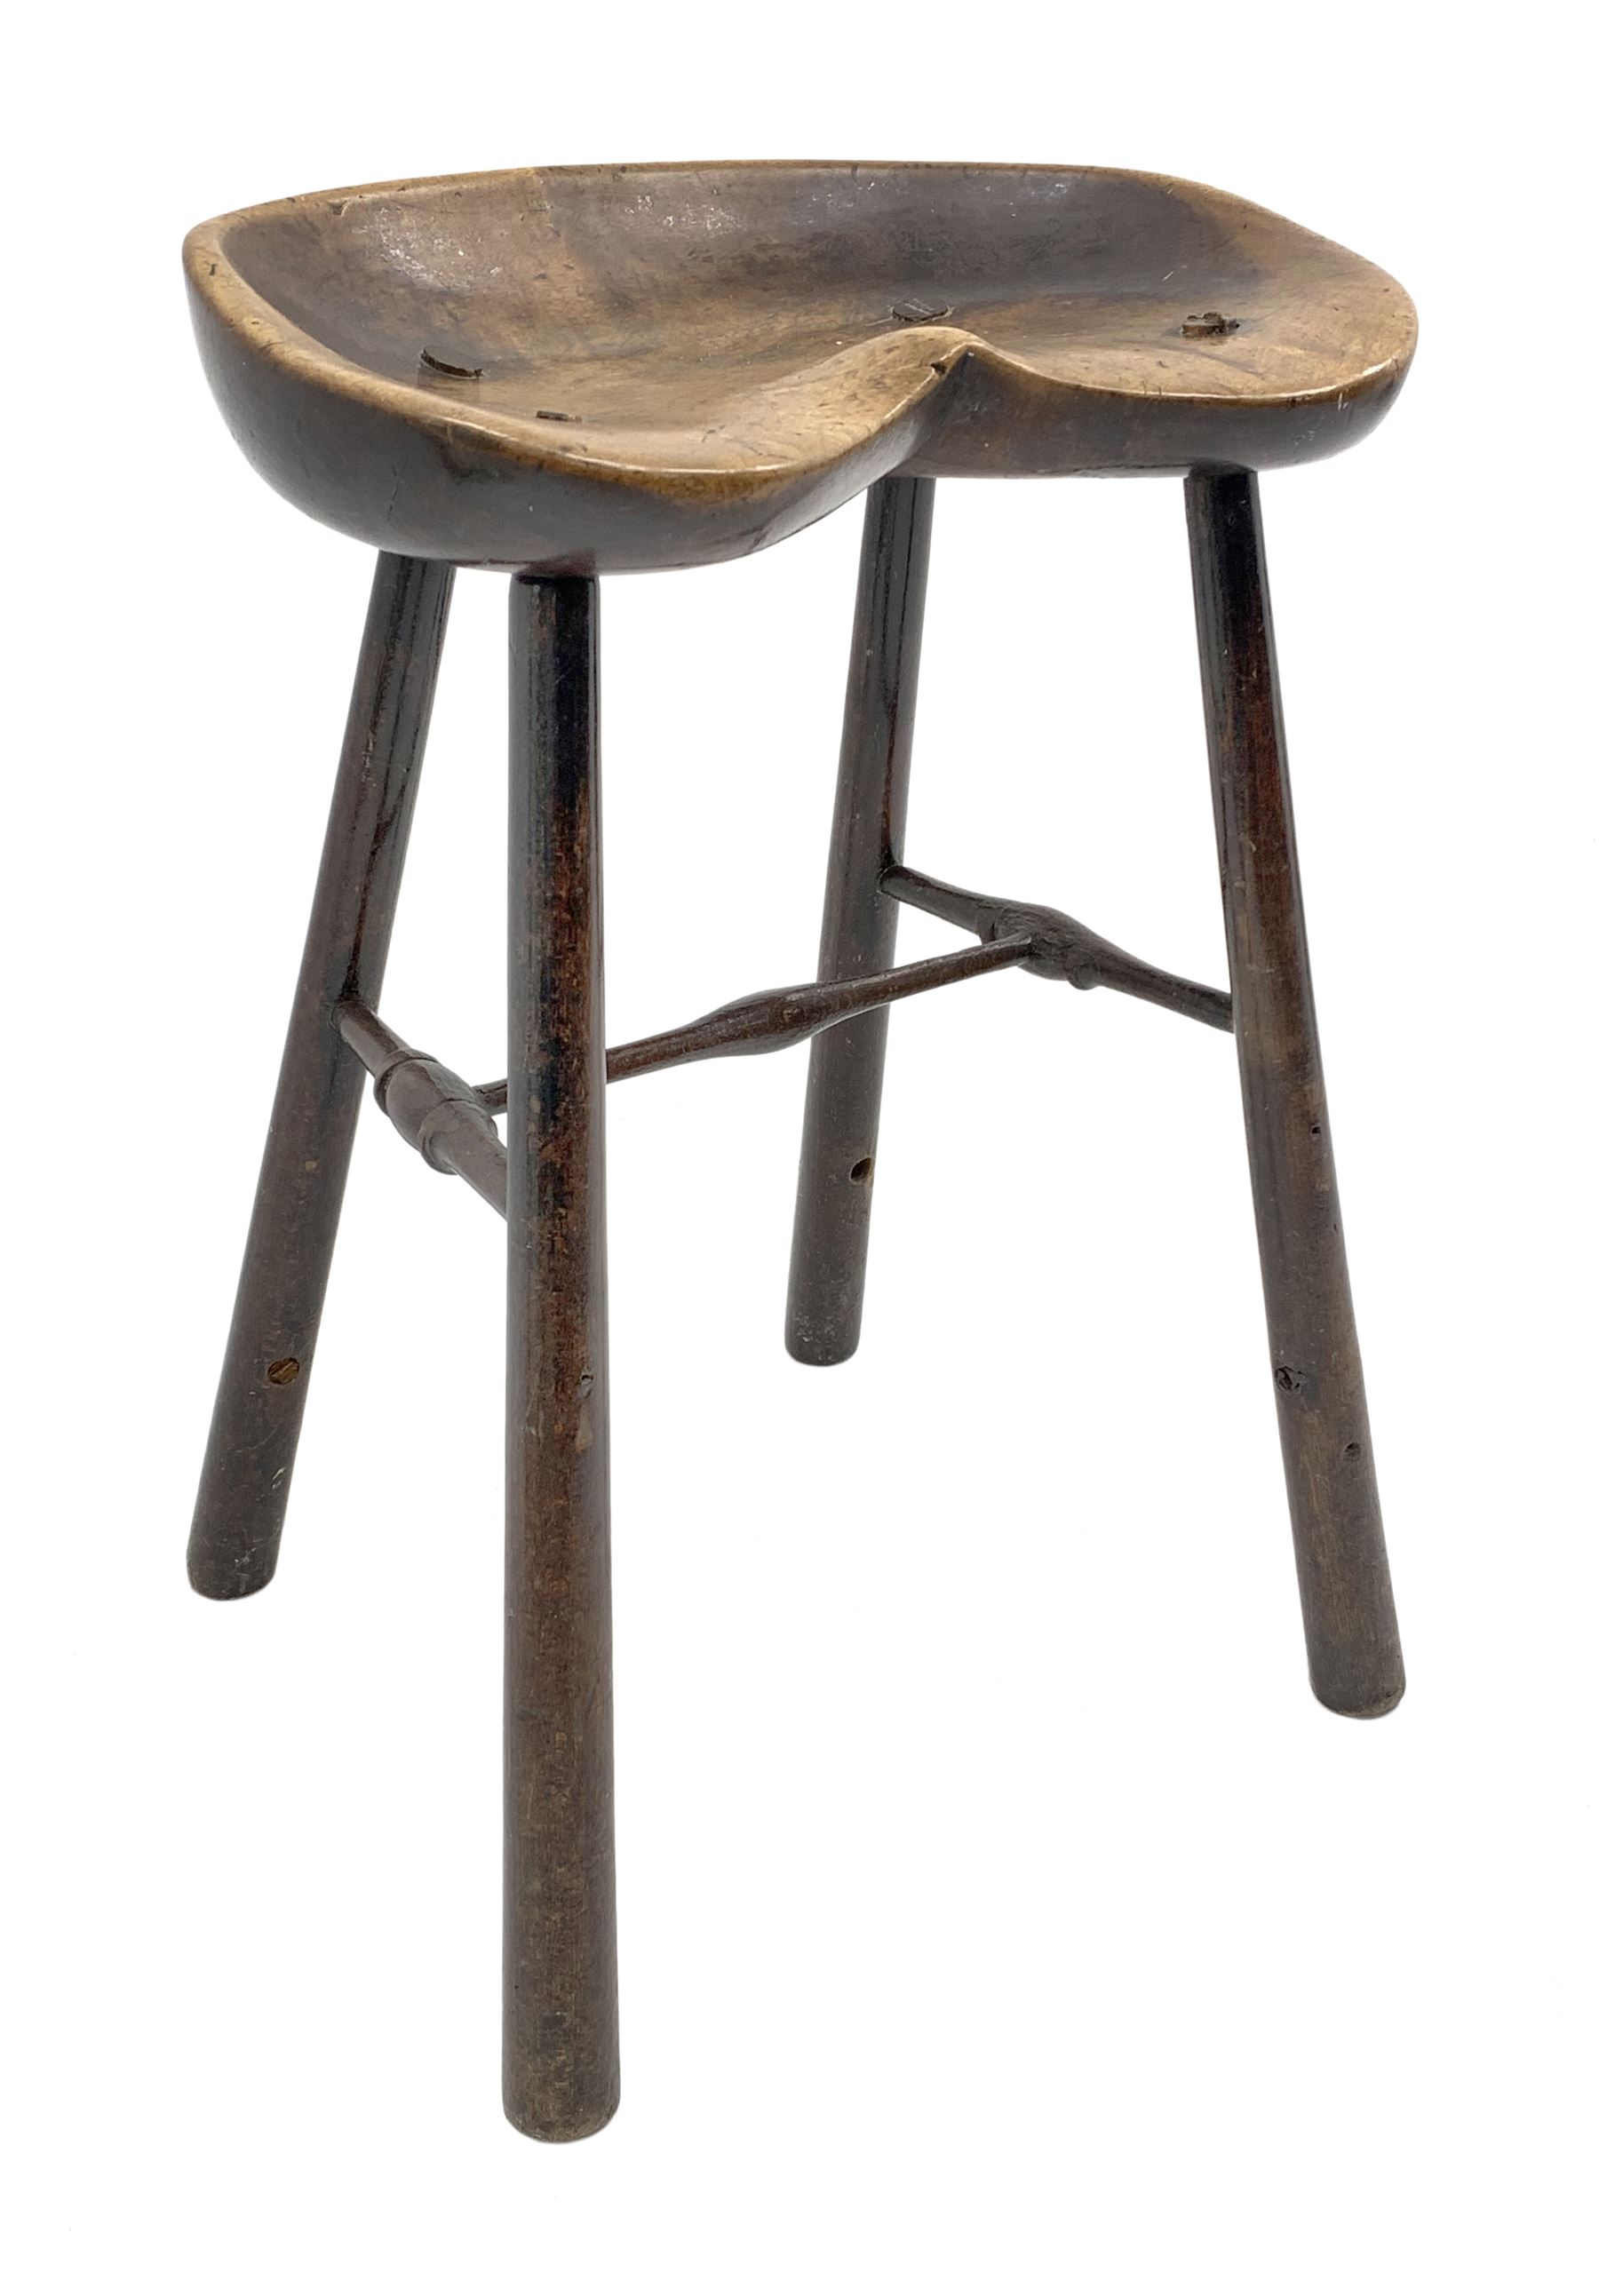 18th/19th century beech saddle stool